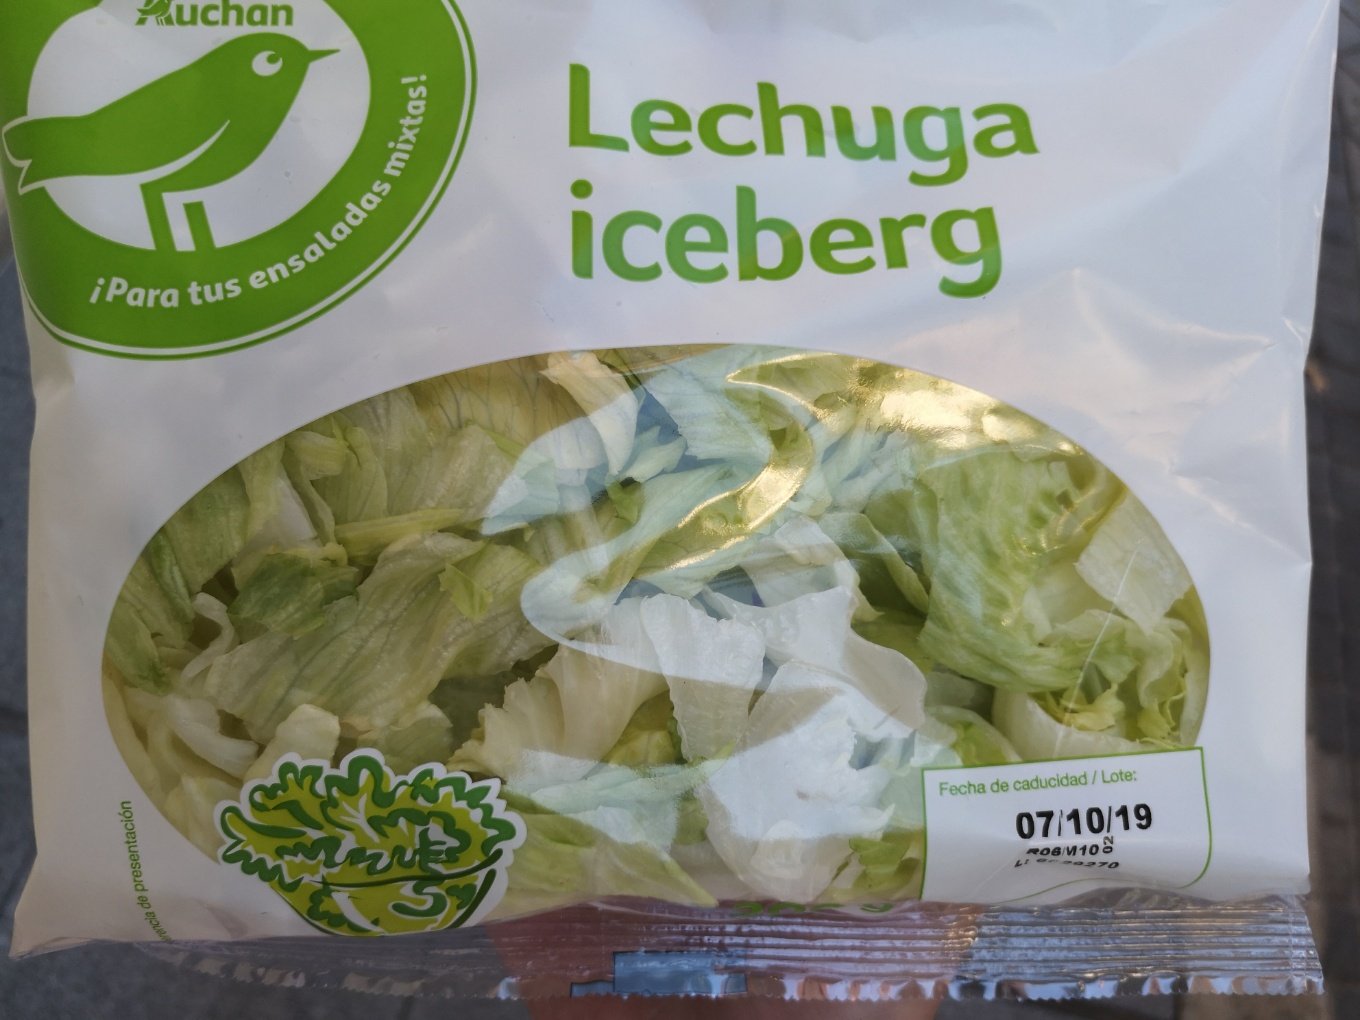 Lechuga iceberg